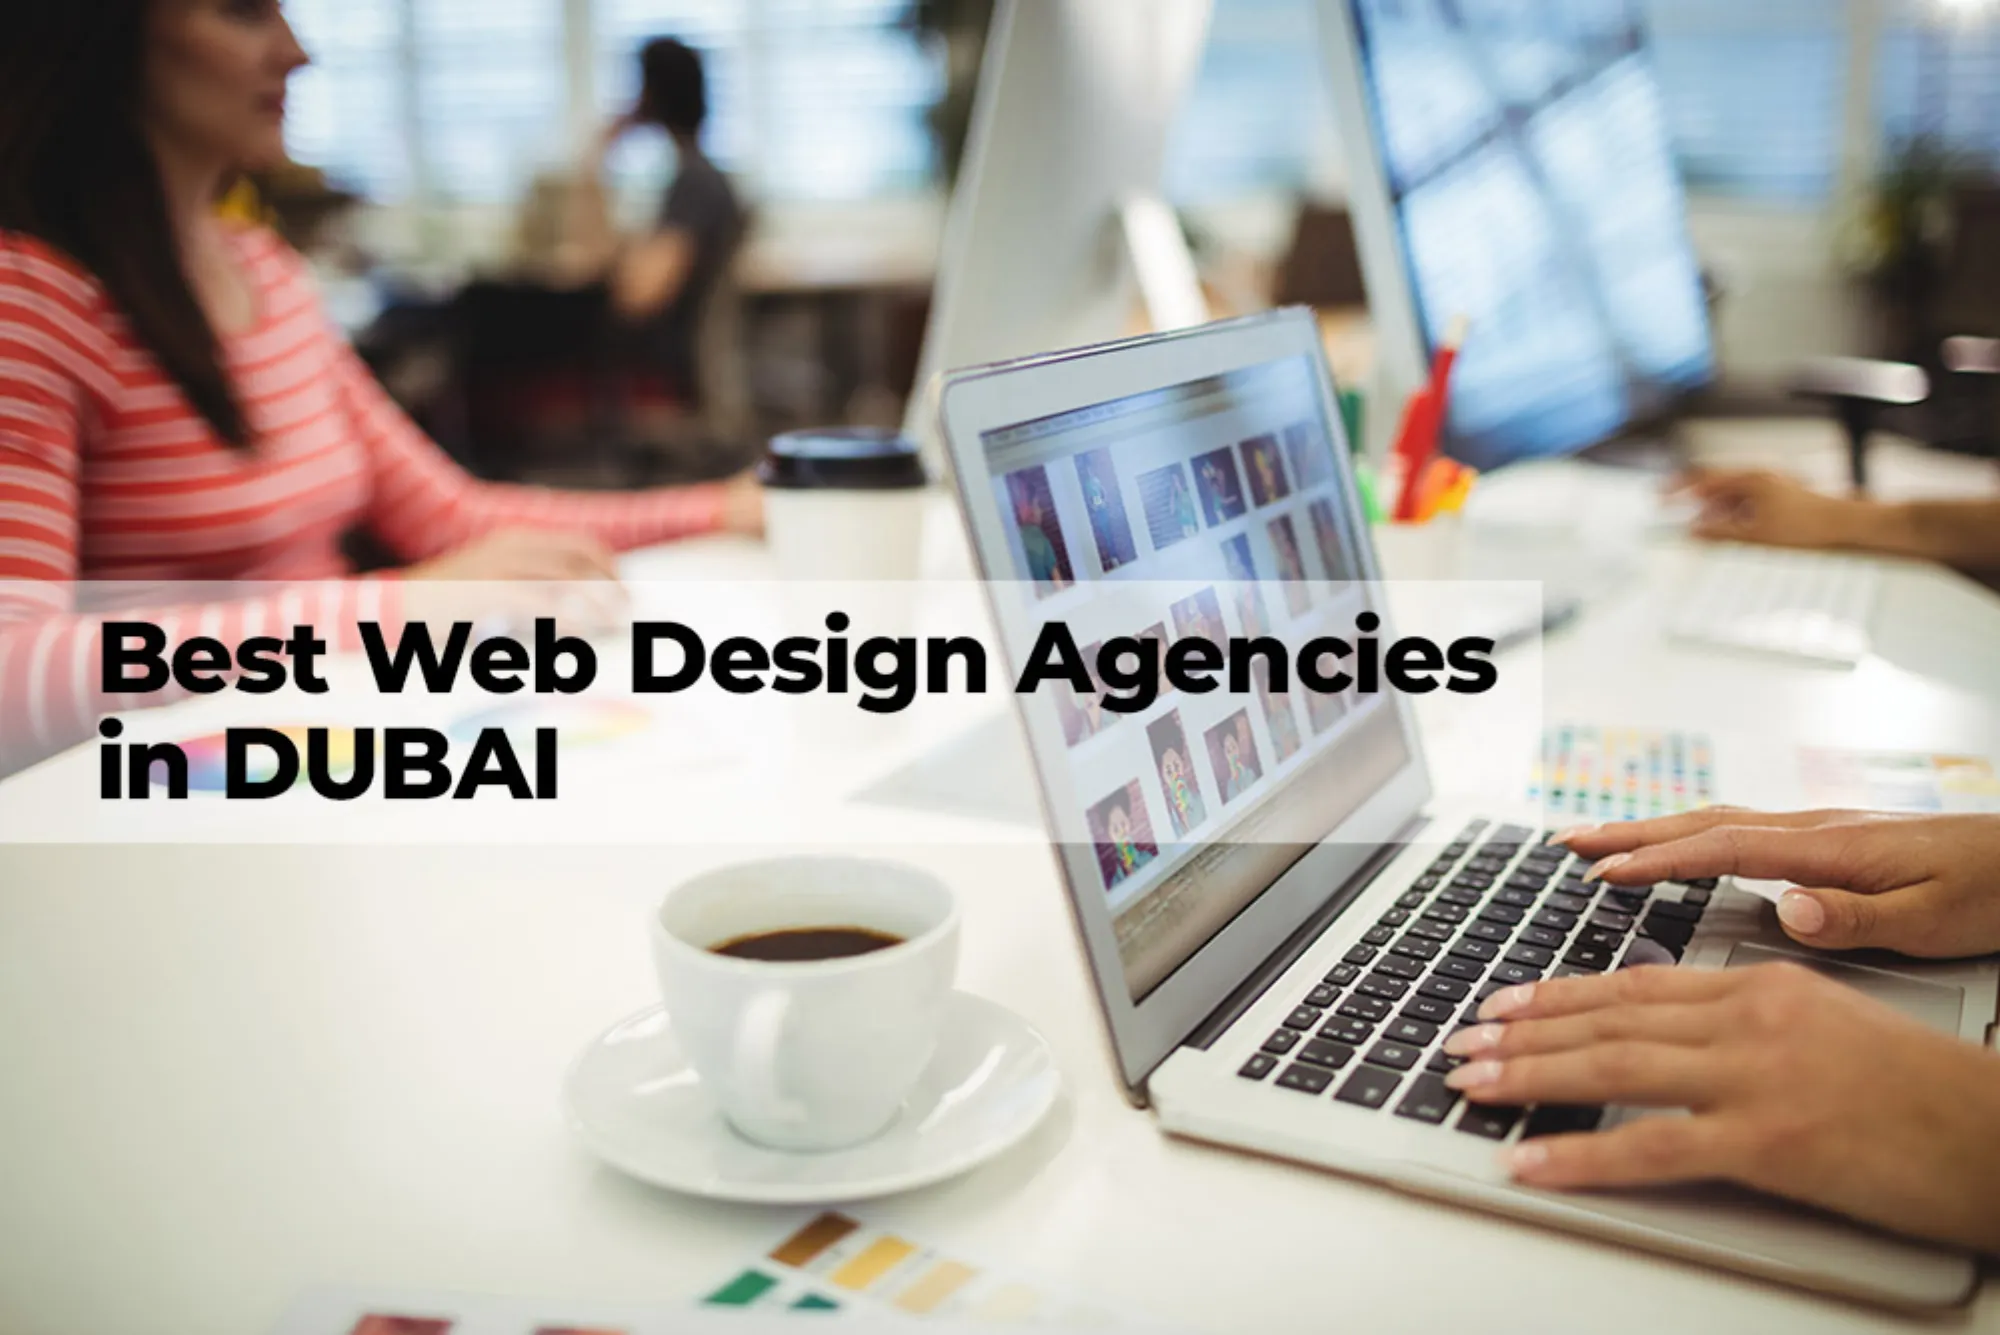 Where to get best website design services in Dubai